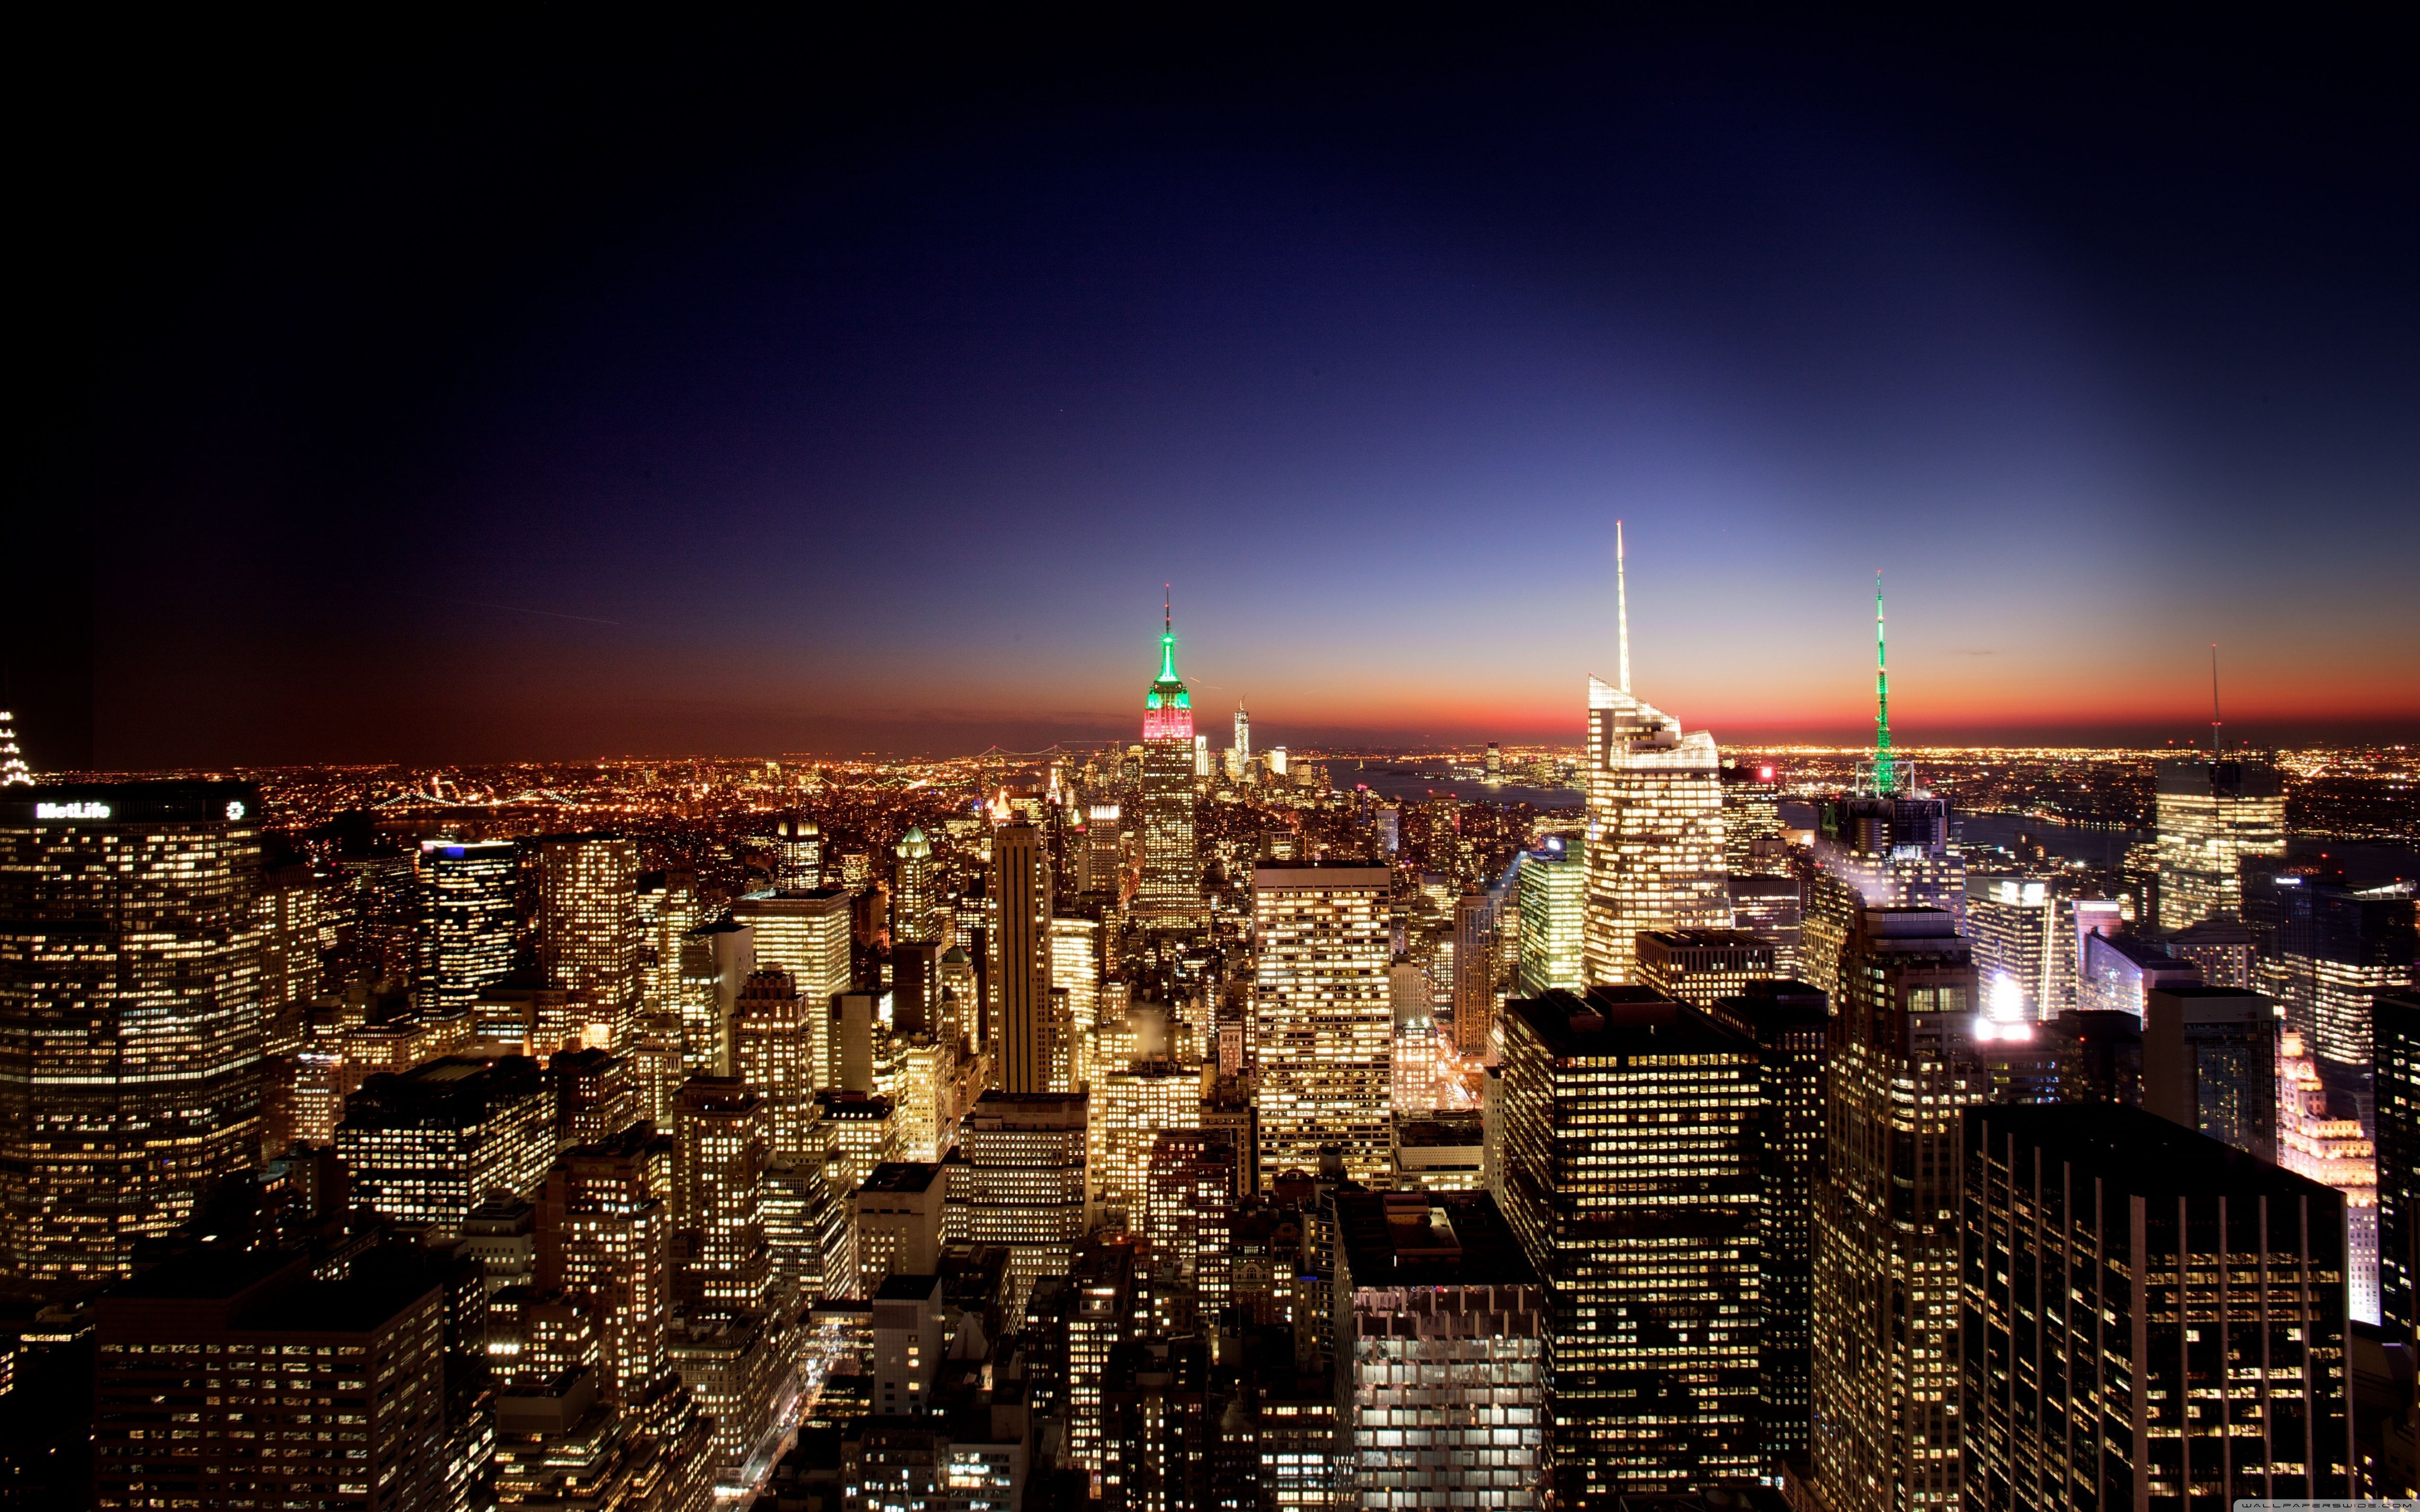 New York City At Night Wallpaper Full HD [5120x3200] - Free ...